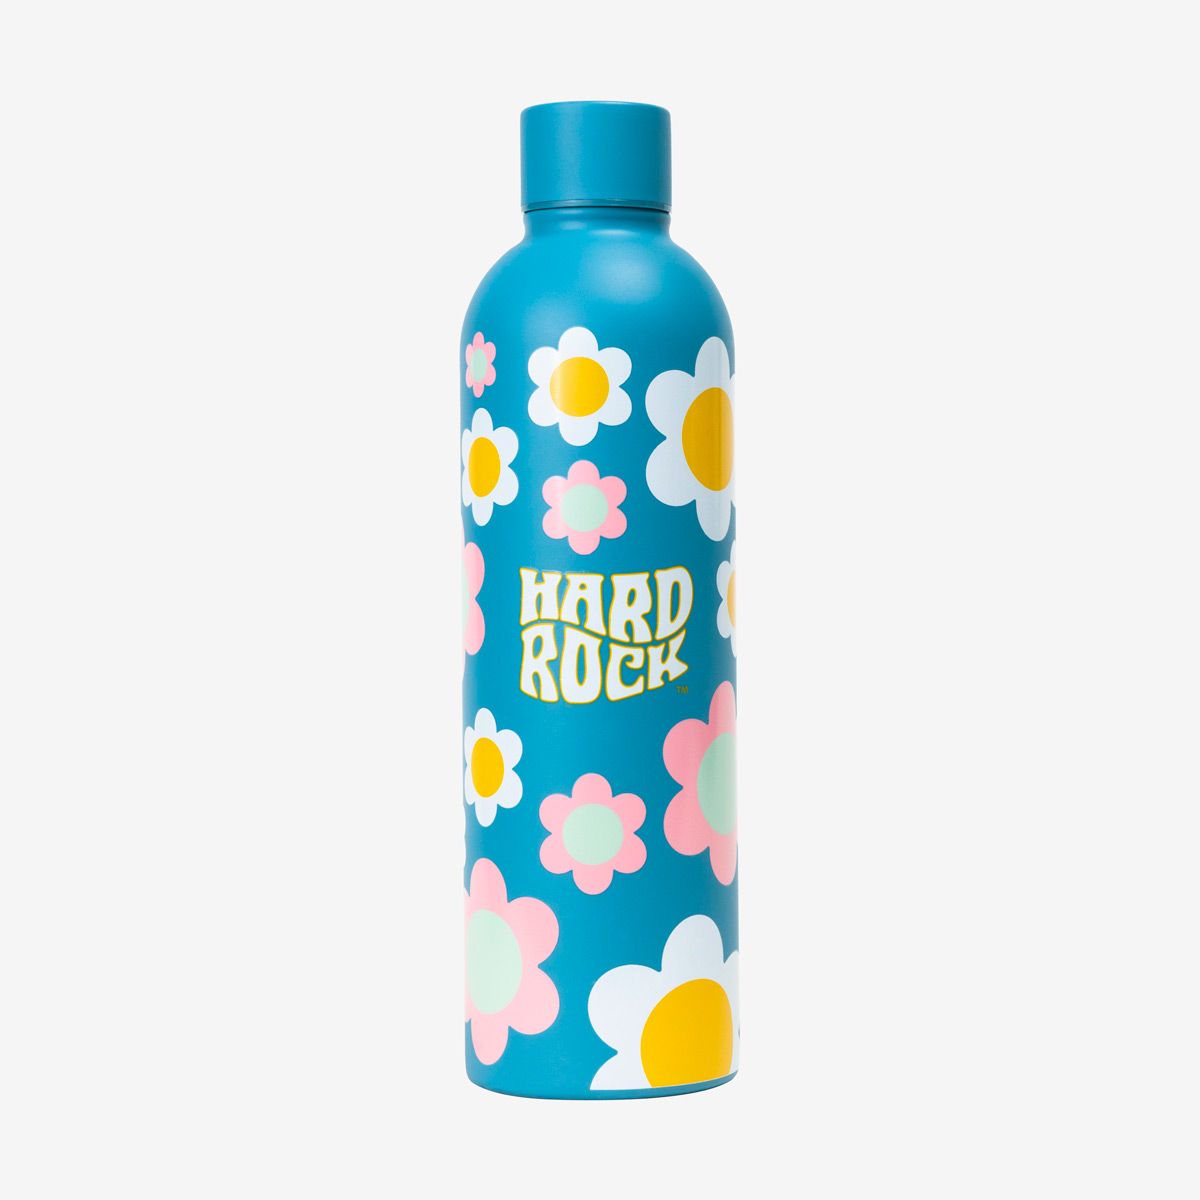 Hard Rock Music Festival Flower Power Water Bottle in Blue image number 1